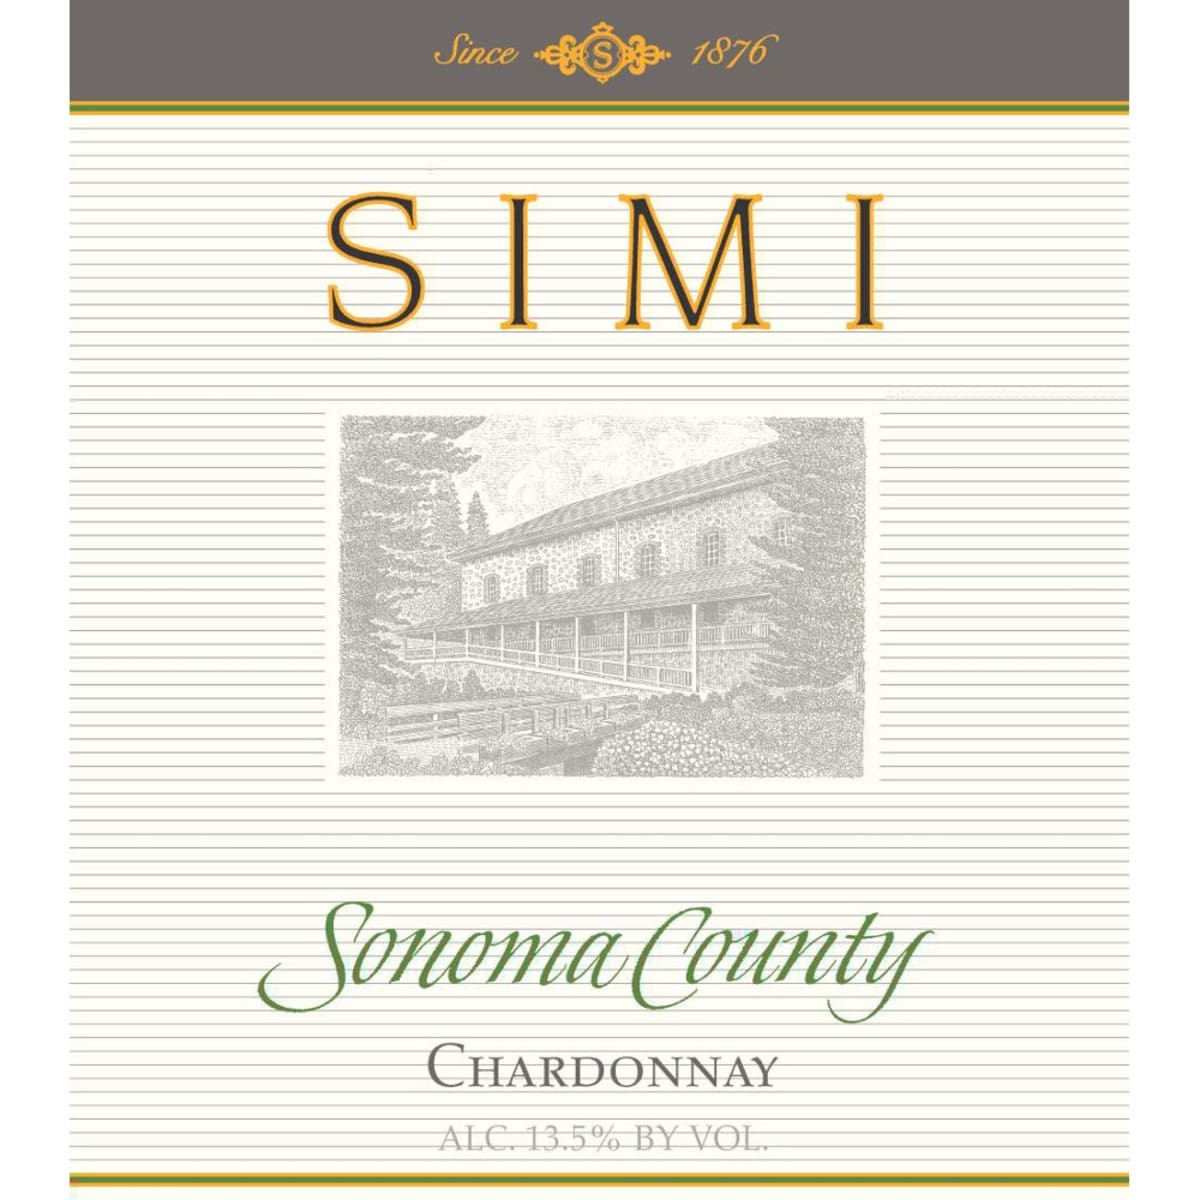 Simi Sonoma County Chardonnay 2005 Front Label